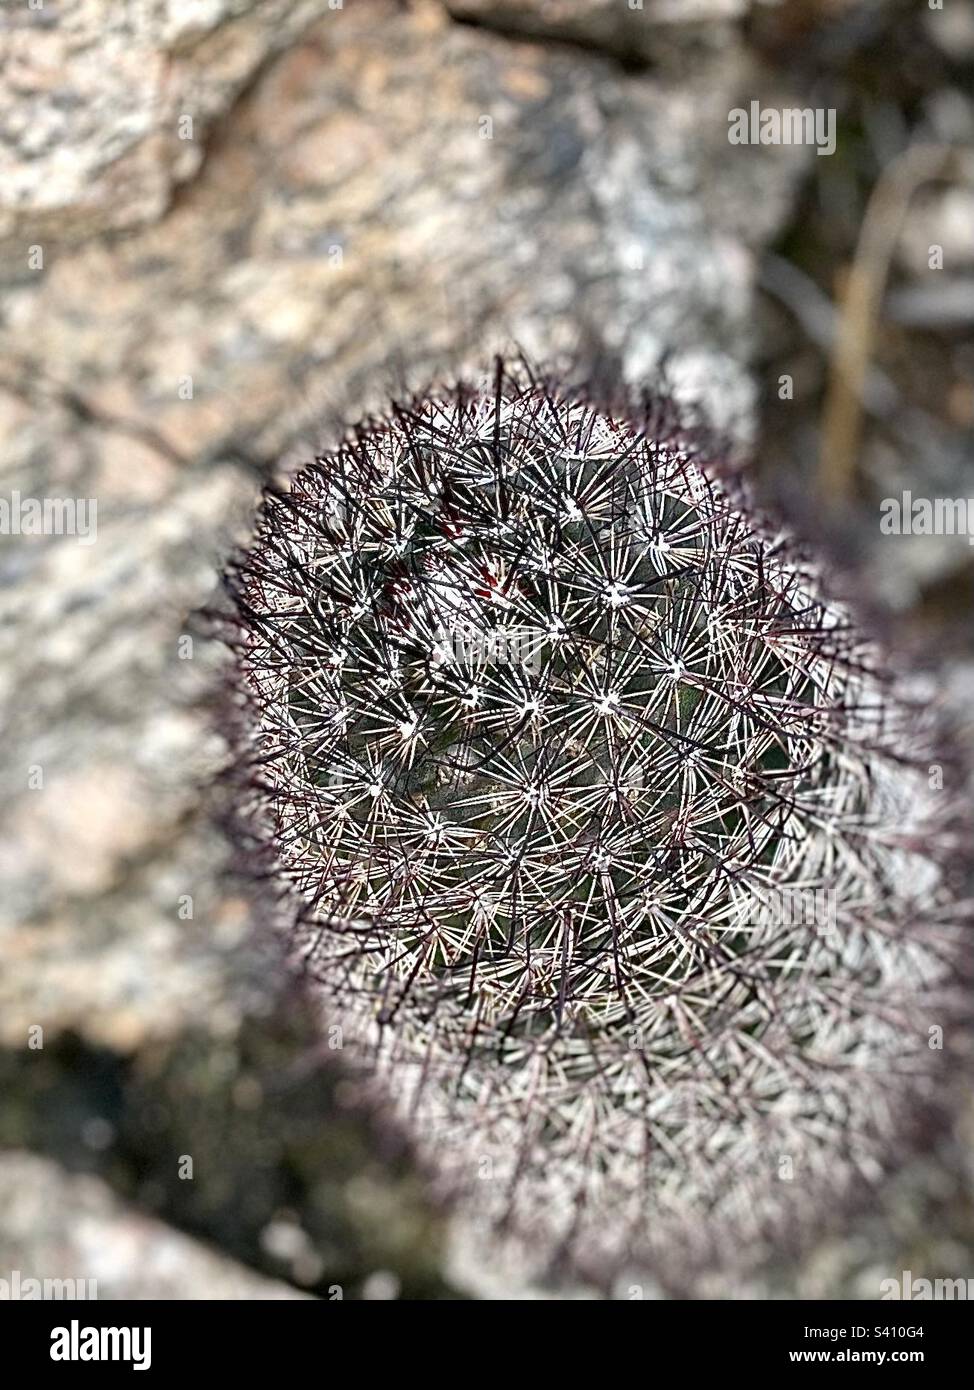 Cojín de alfiler cactus Mammillaria, rocas de granito, Phoenix, Arizona, modo retrato Foto de stock